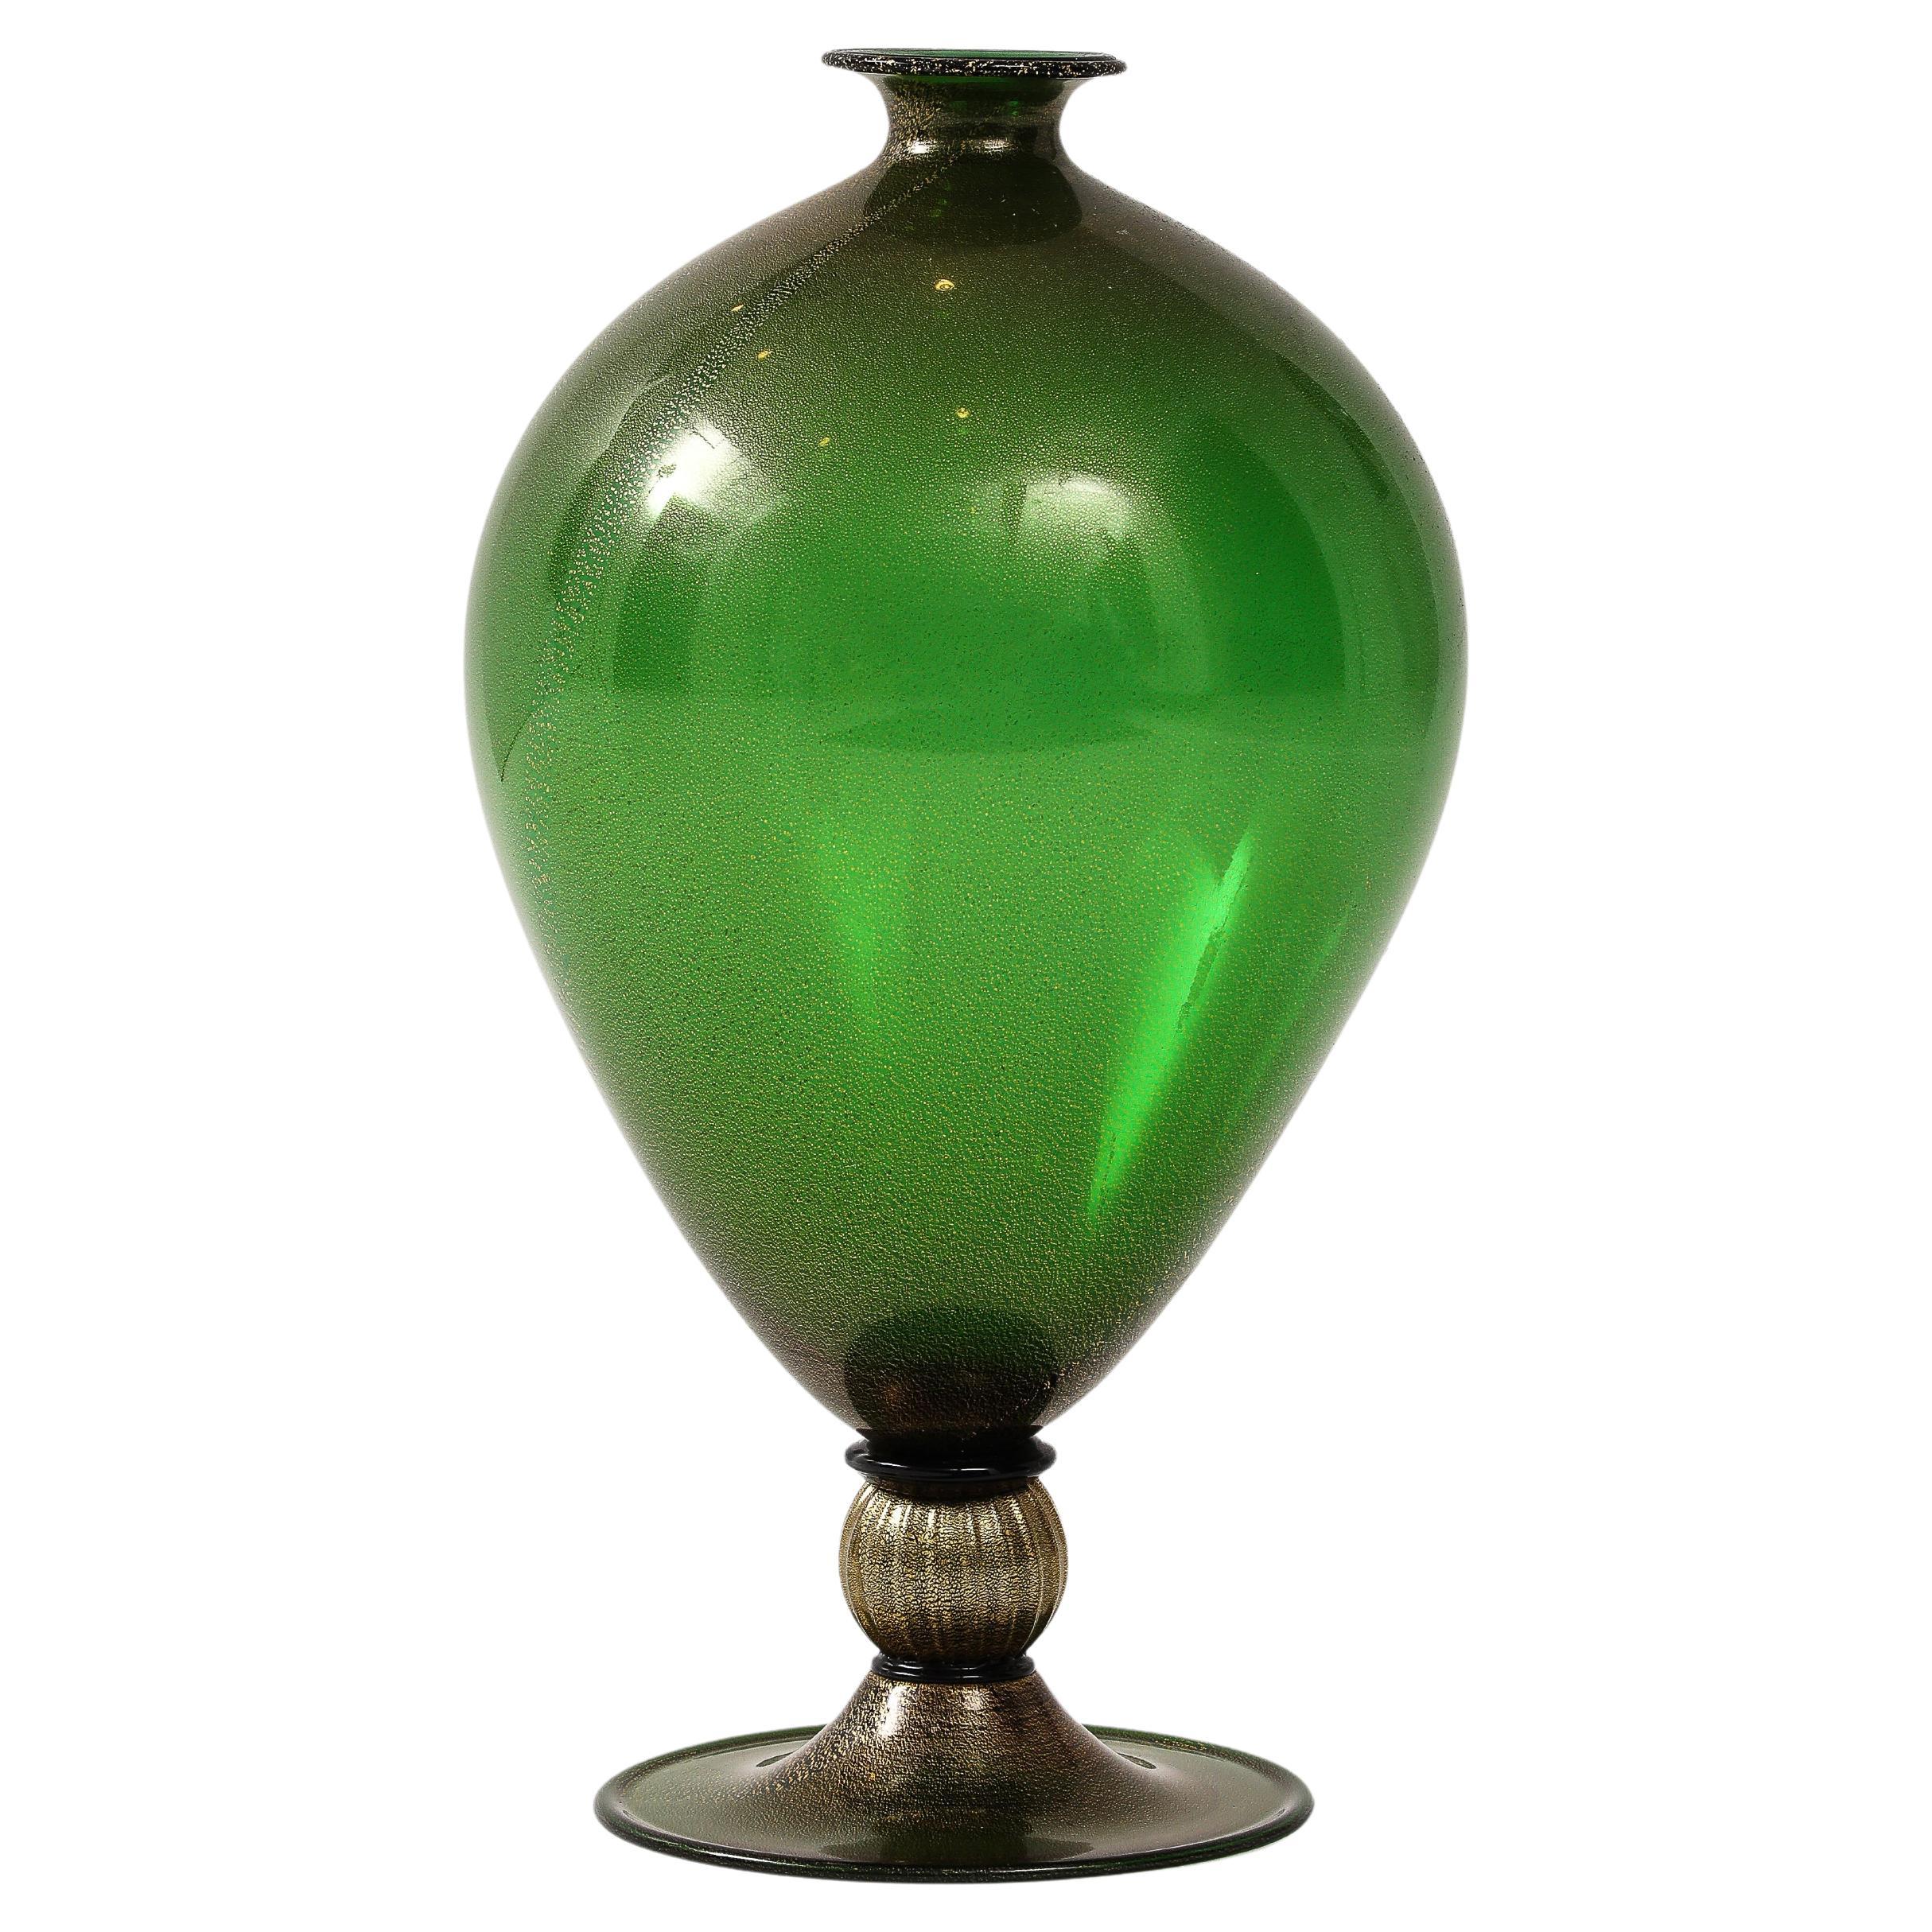 Seguso vetri d'arte Rare Veronese Vase in Green with Gold Inclusions